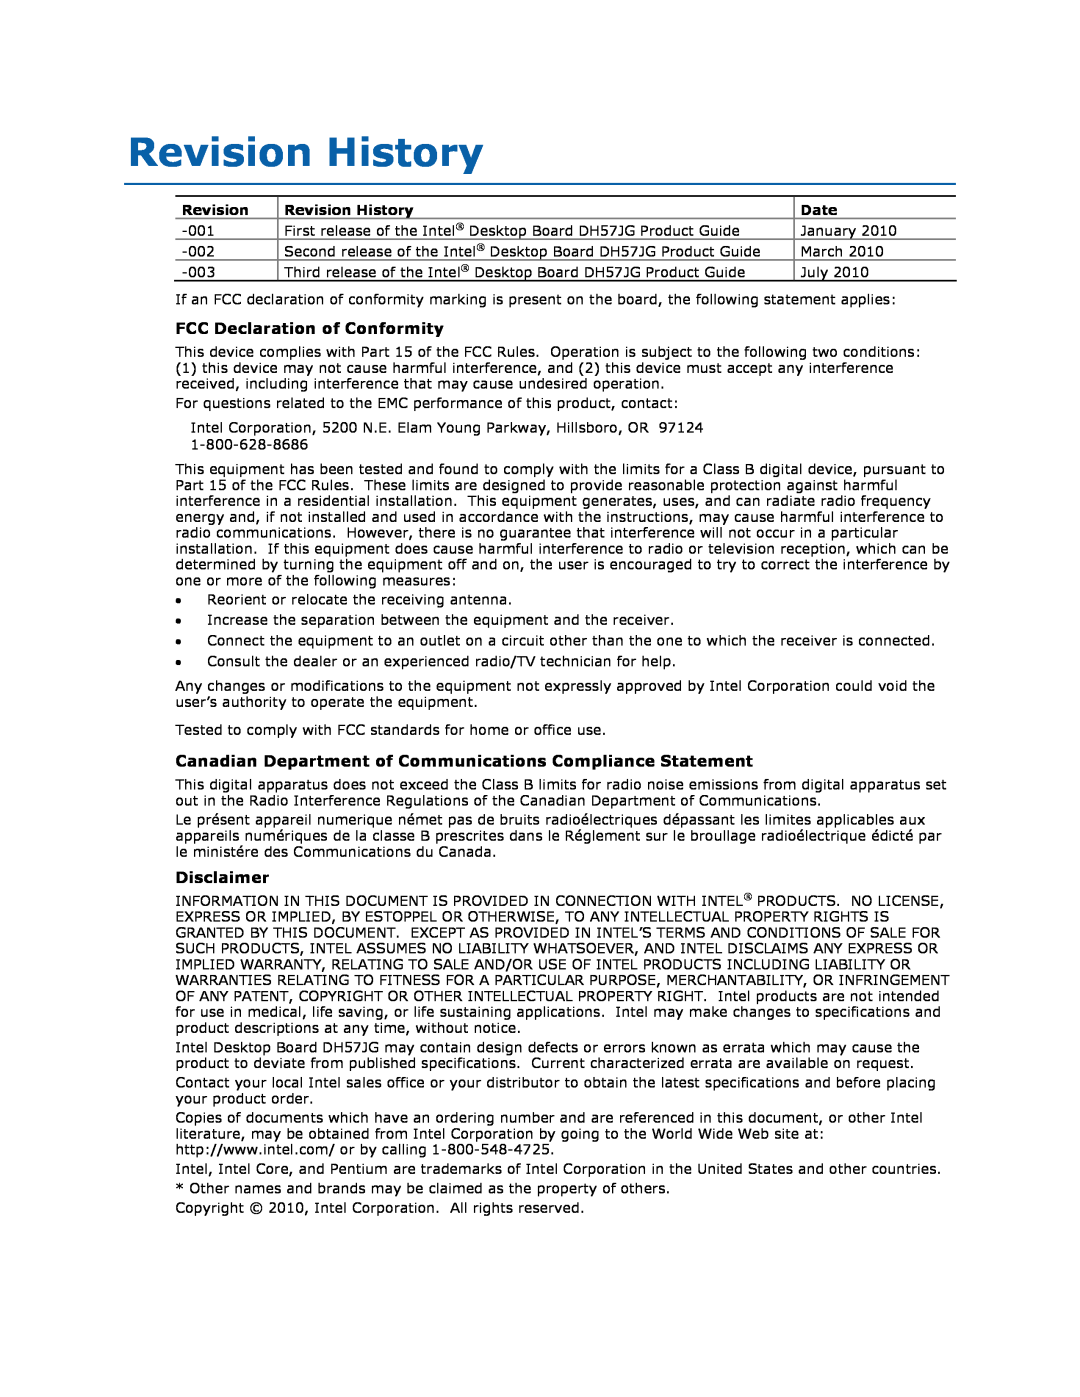 Intel BLKDH57JG manual Revision History, FCC Declaration of Conformity, Disclaimer, Date 